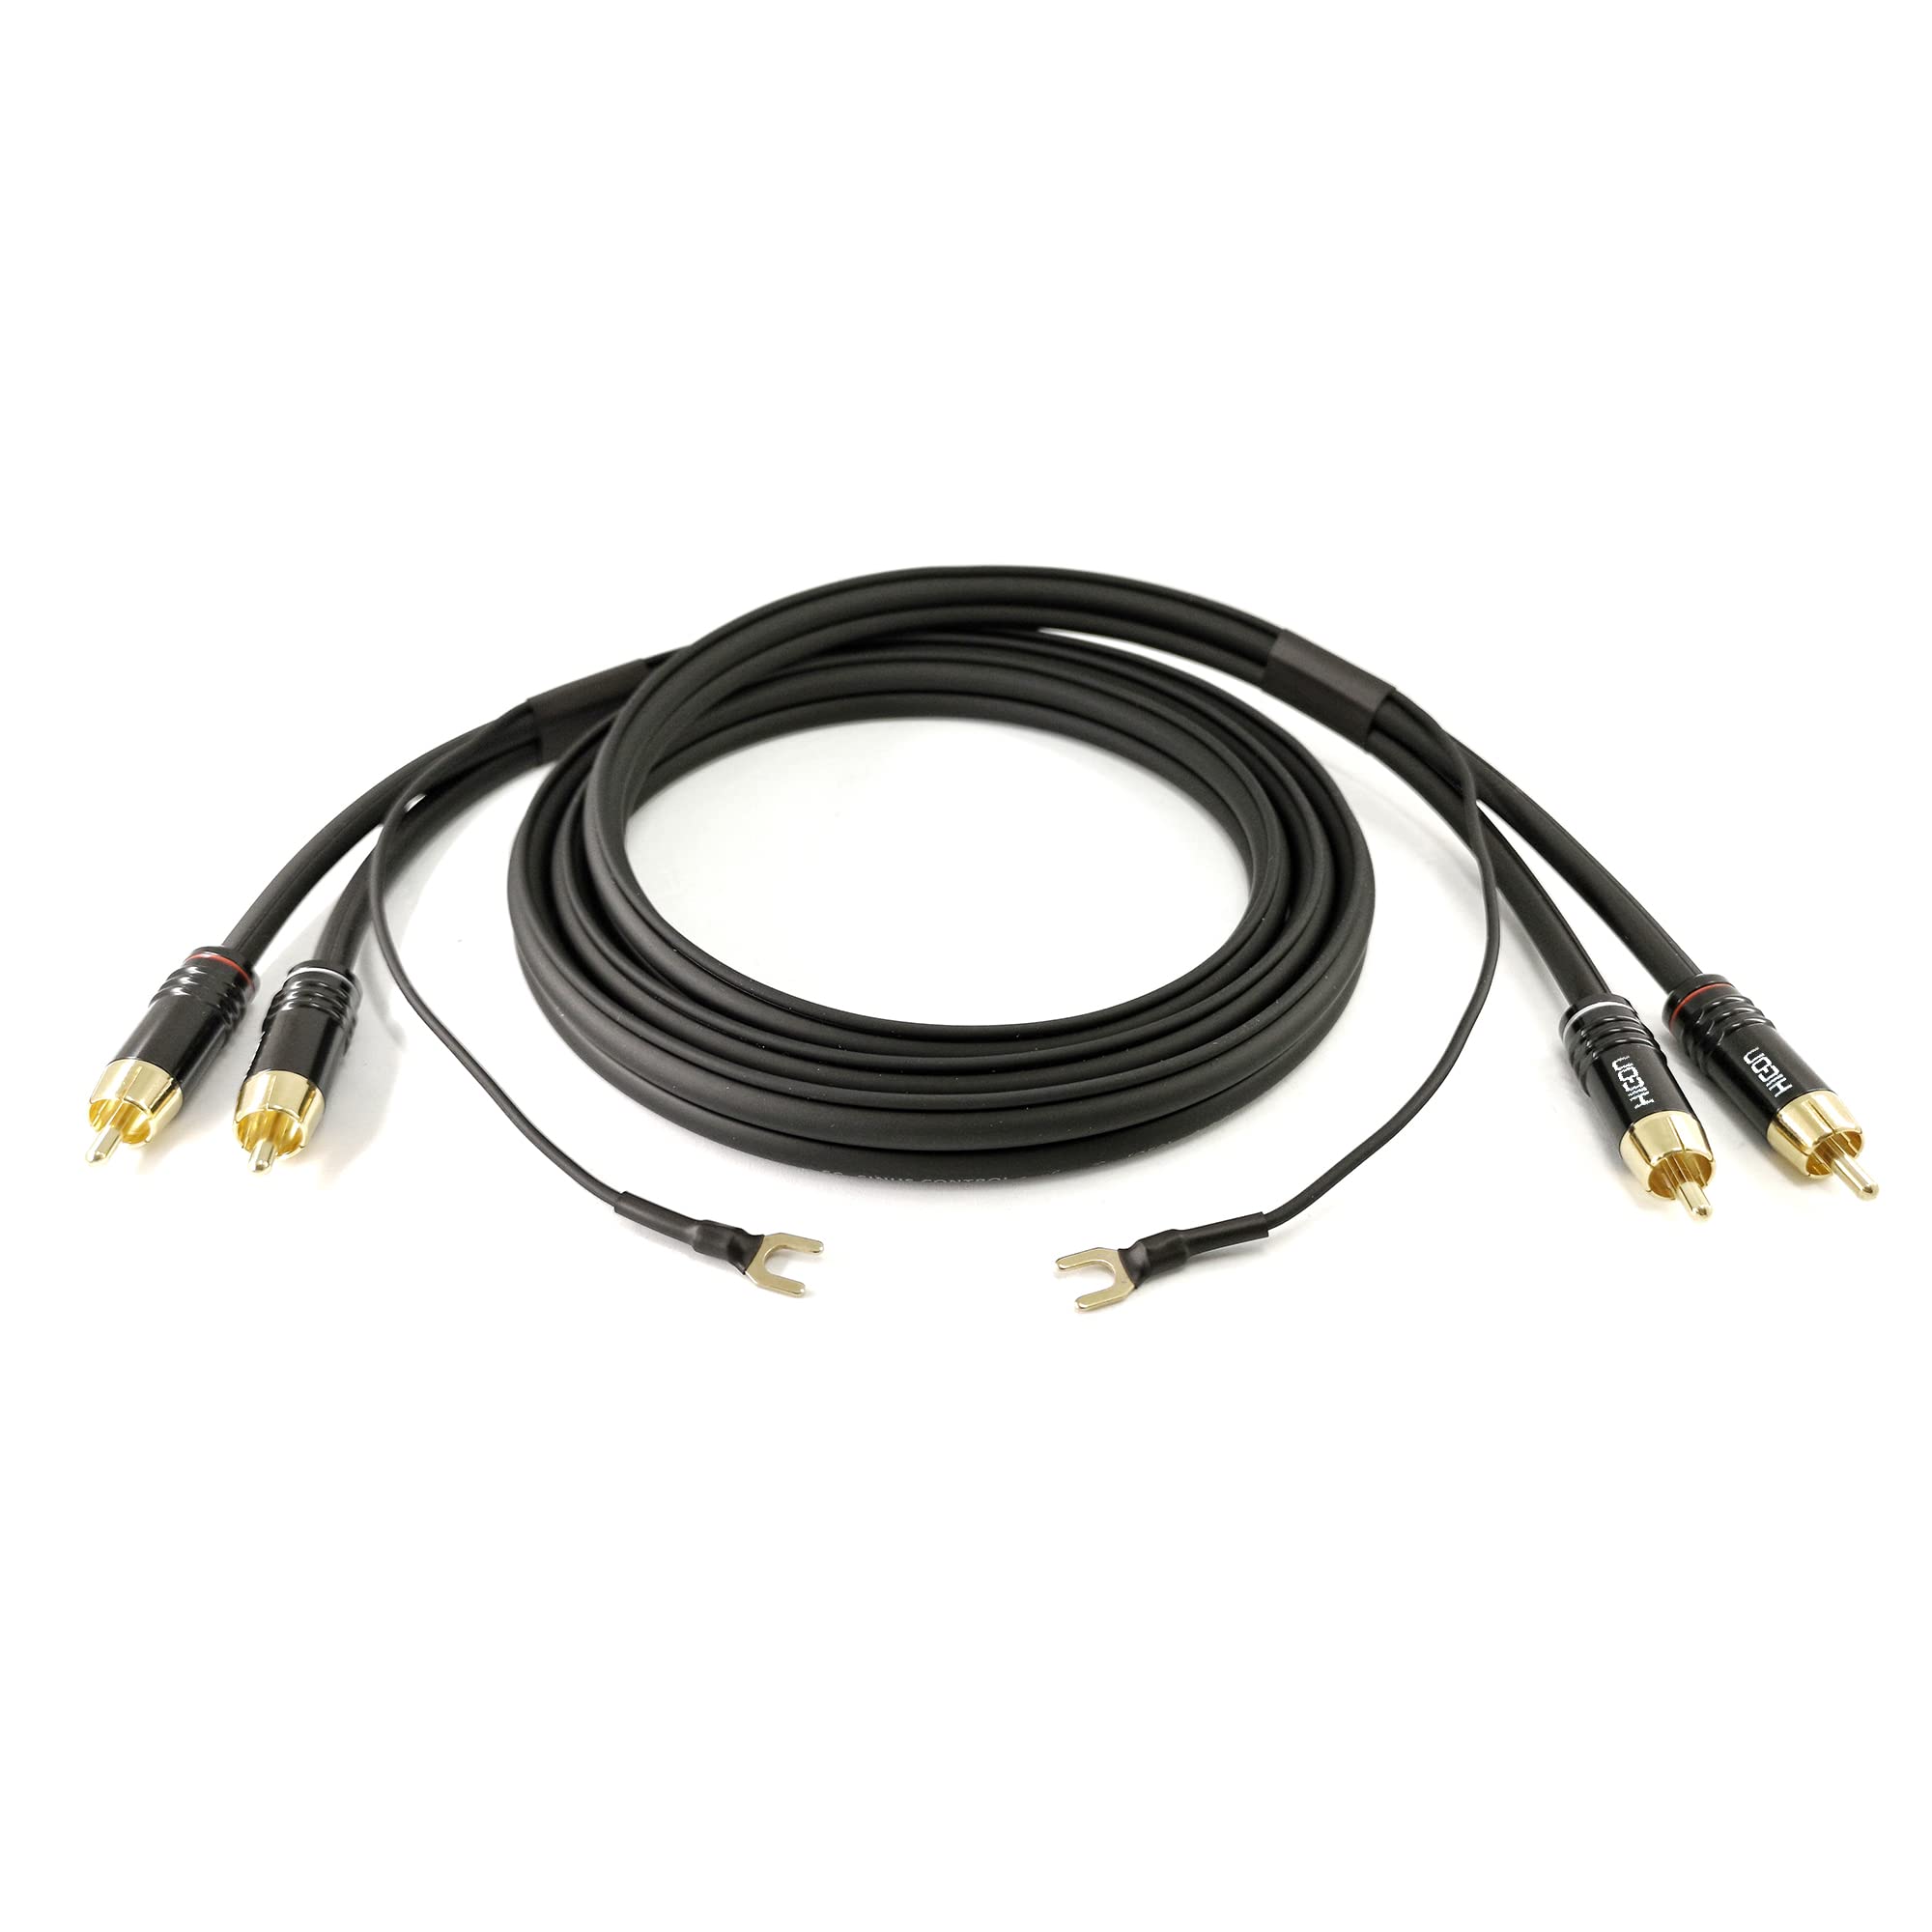 Selected Cable 6m NF- Phonokabel geschirmt Stereo OFC 3x 0,35mm² RCA- Cinchkabel extra 6,1m lange Masseleitung für Receiver GND Anschluß - SC81-K3-BLK-0600